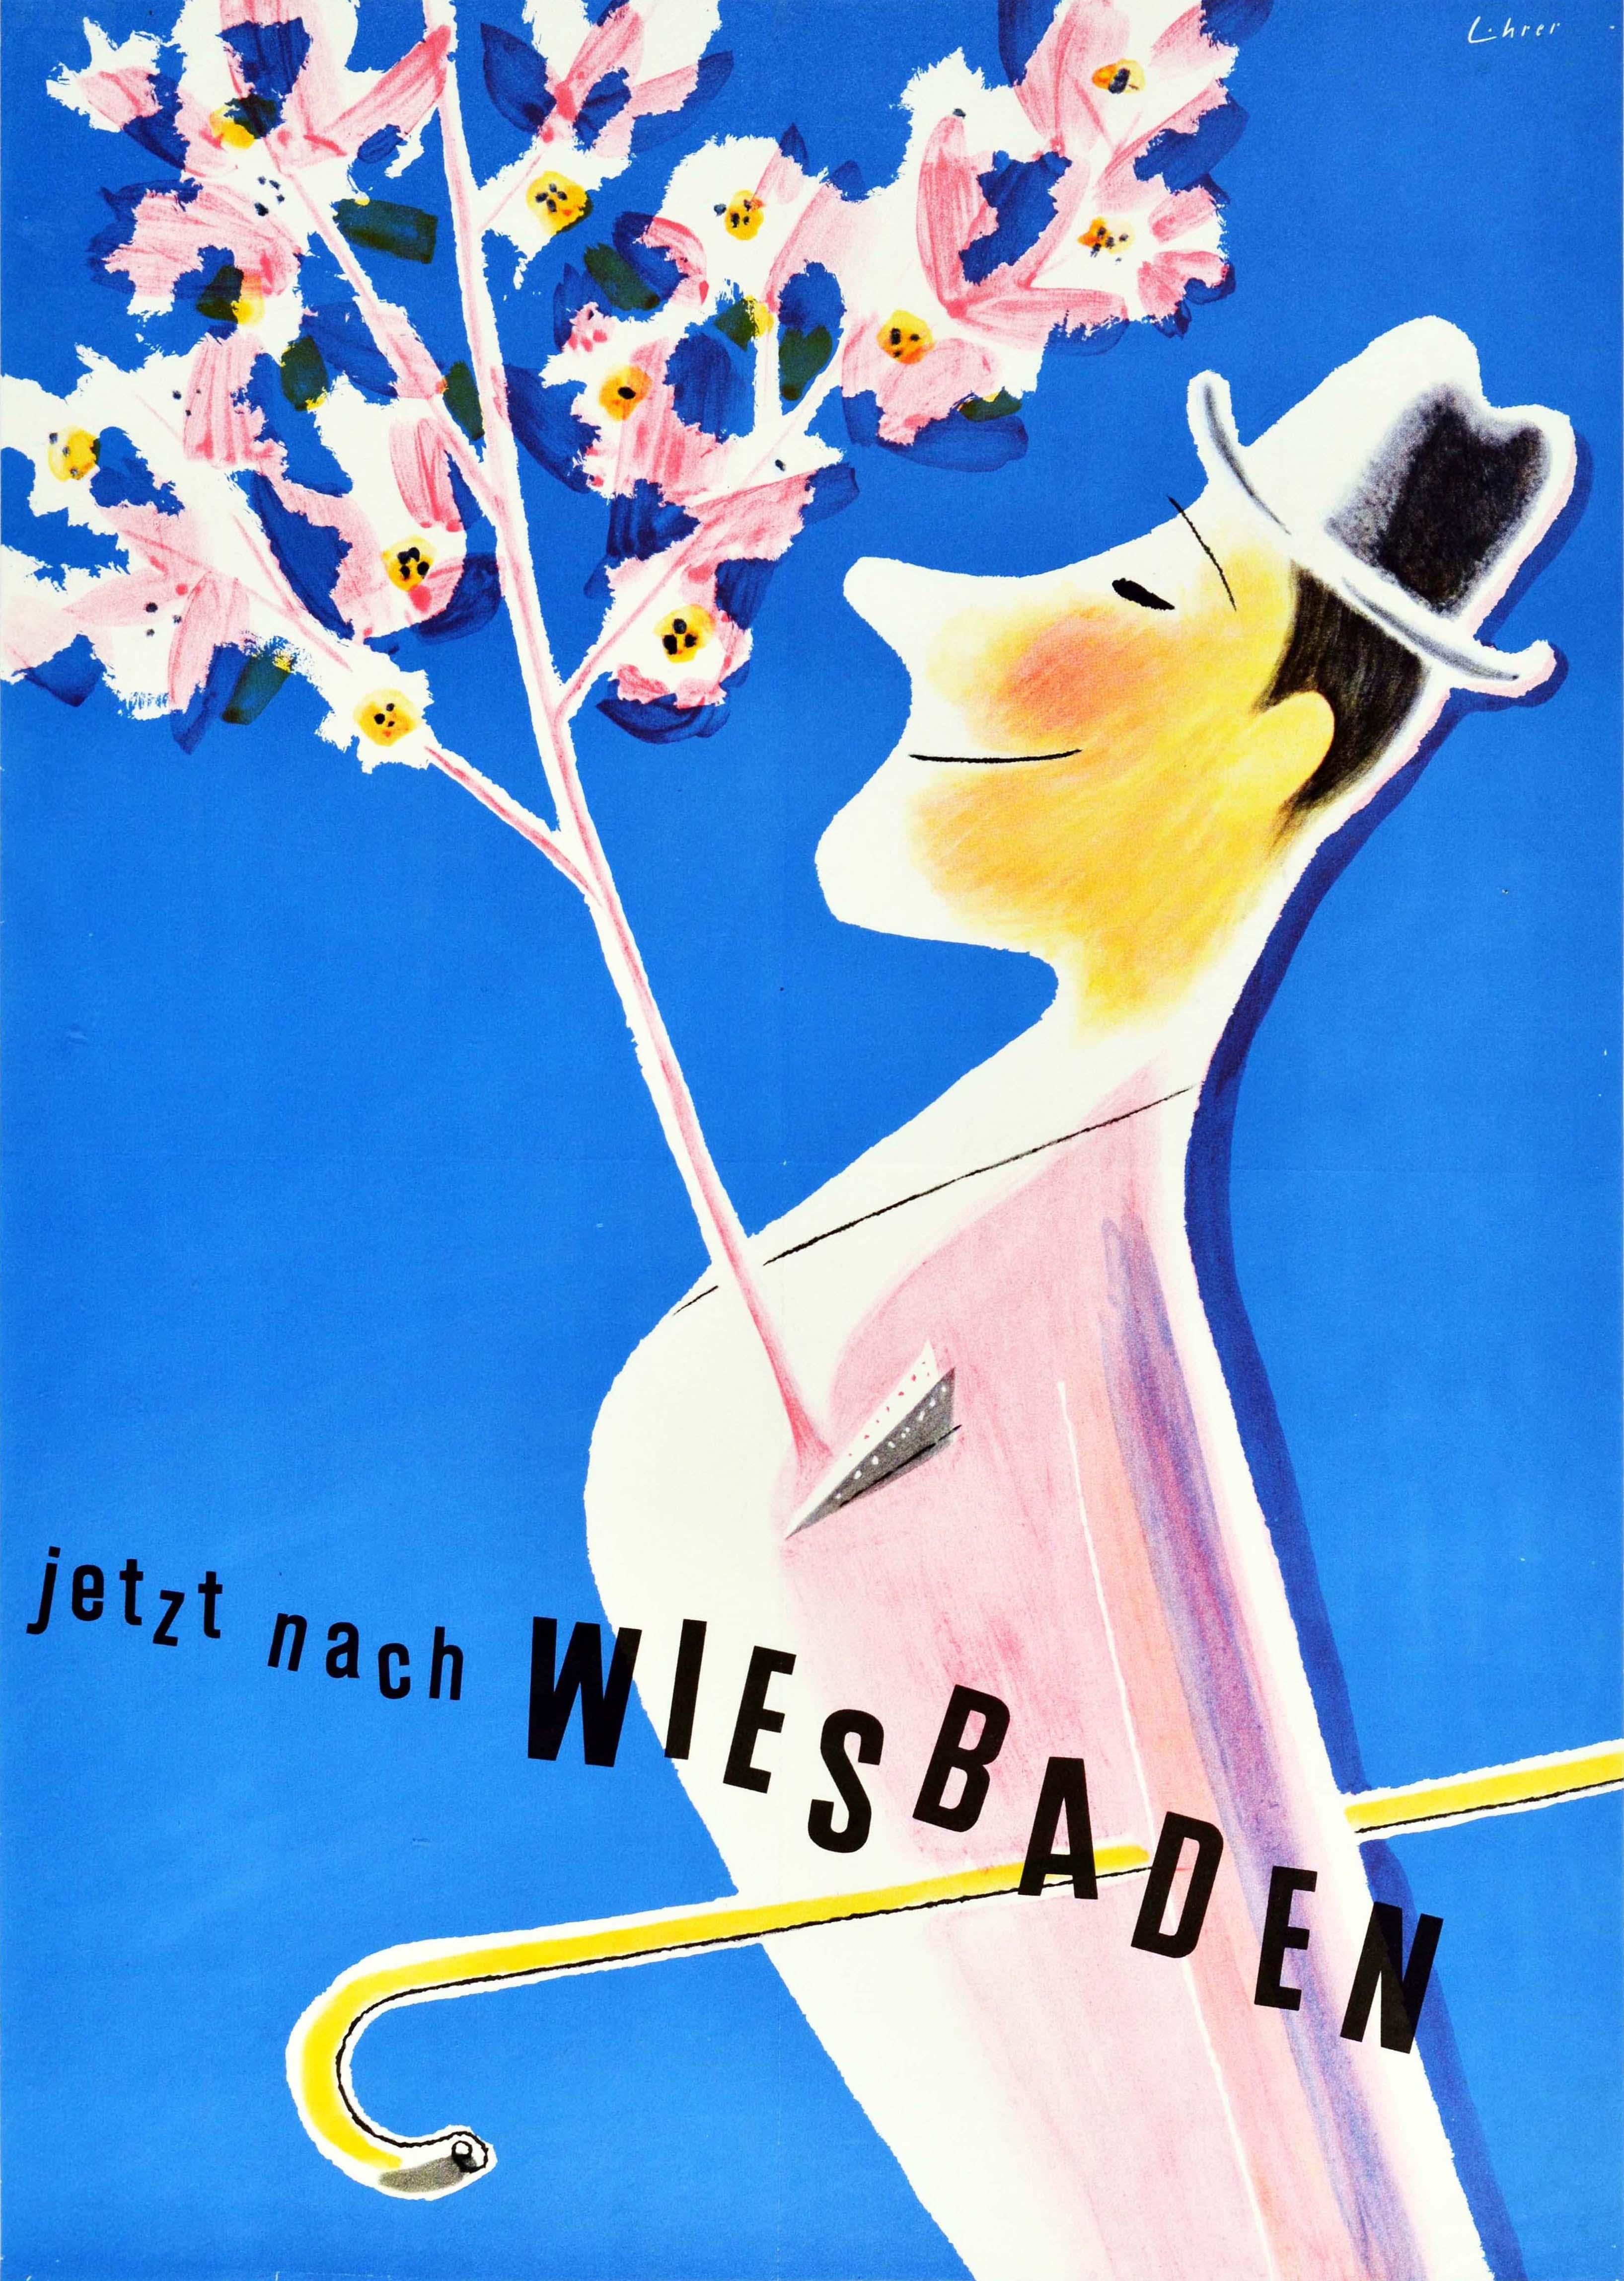 Hanns Lohrer Print - Original Vintage Travel Poster Wiesbaden Germany Spa Flower Blossom Tree Design